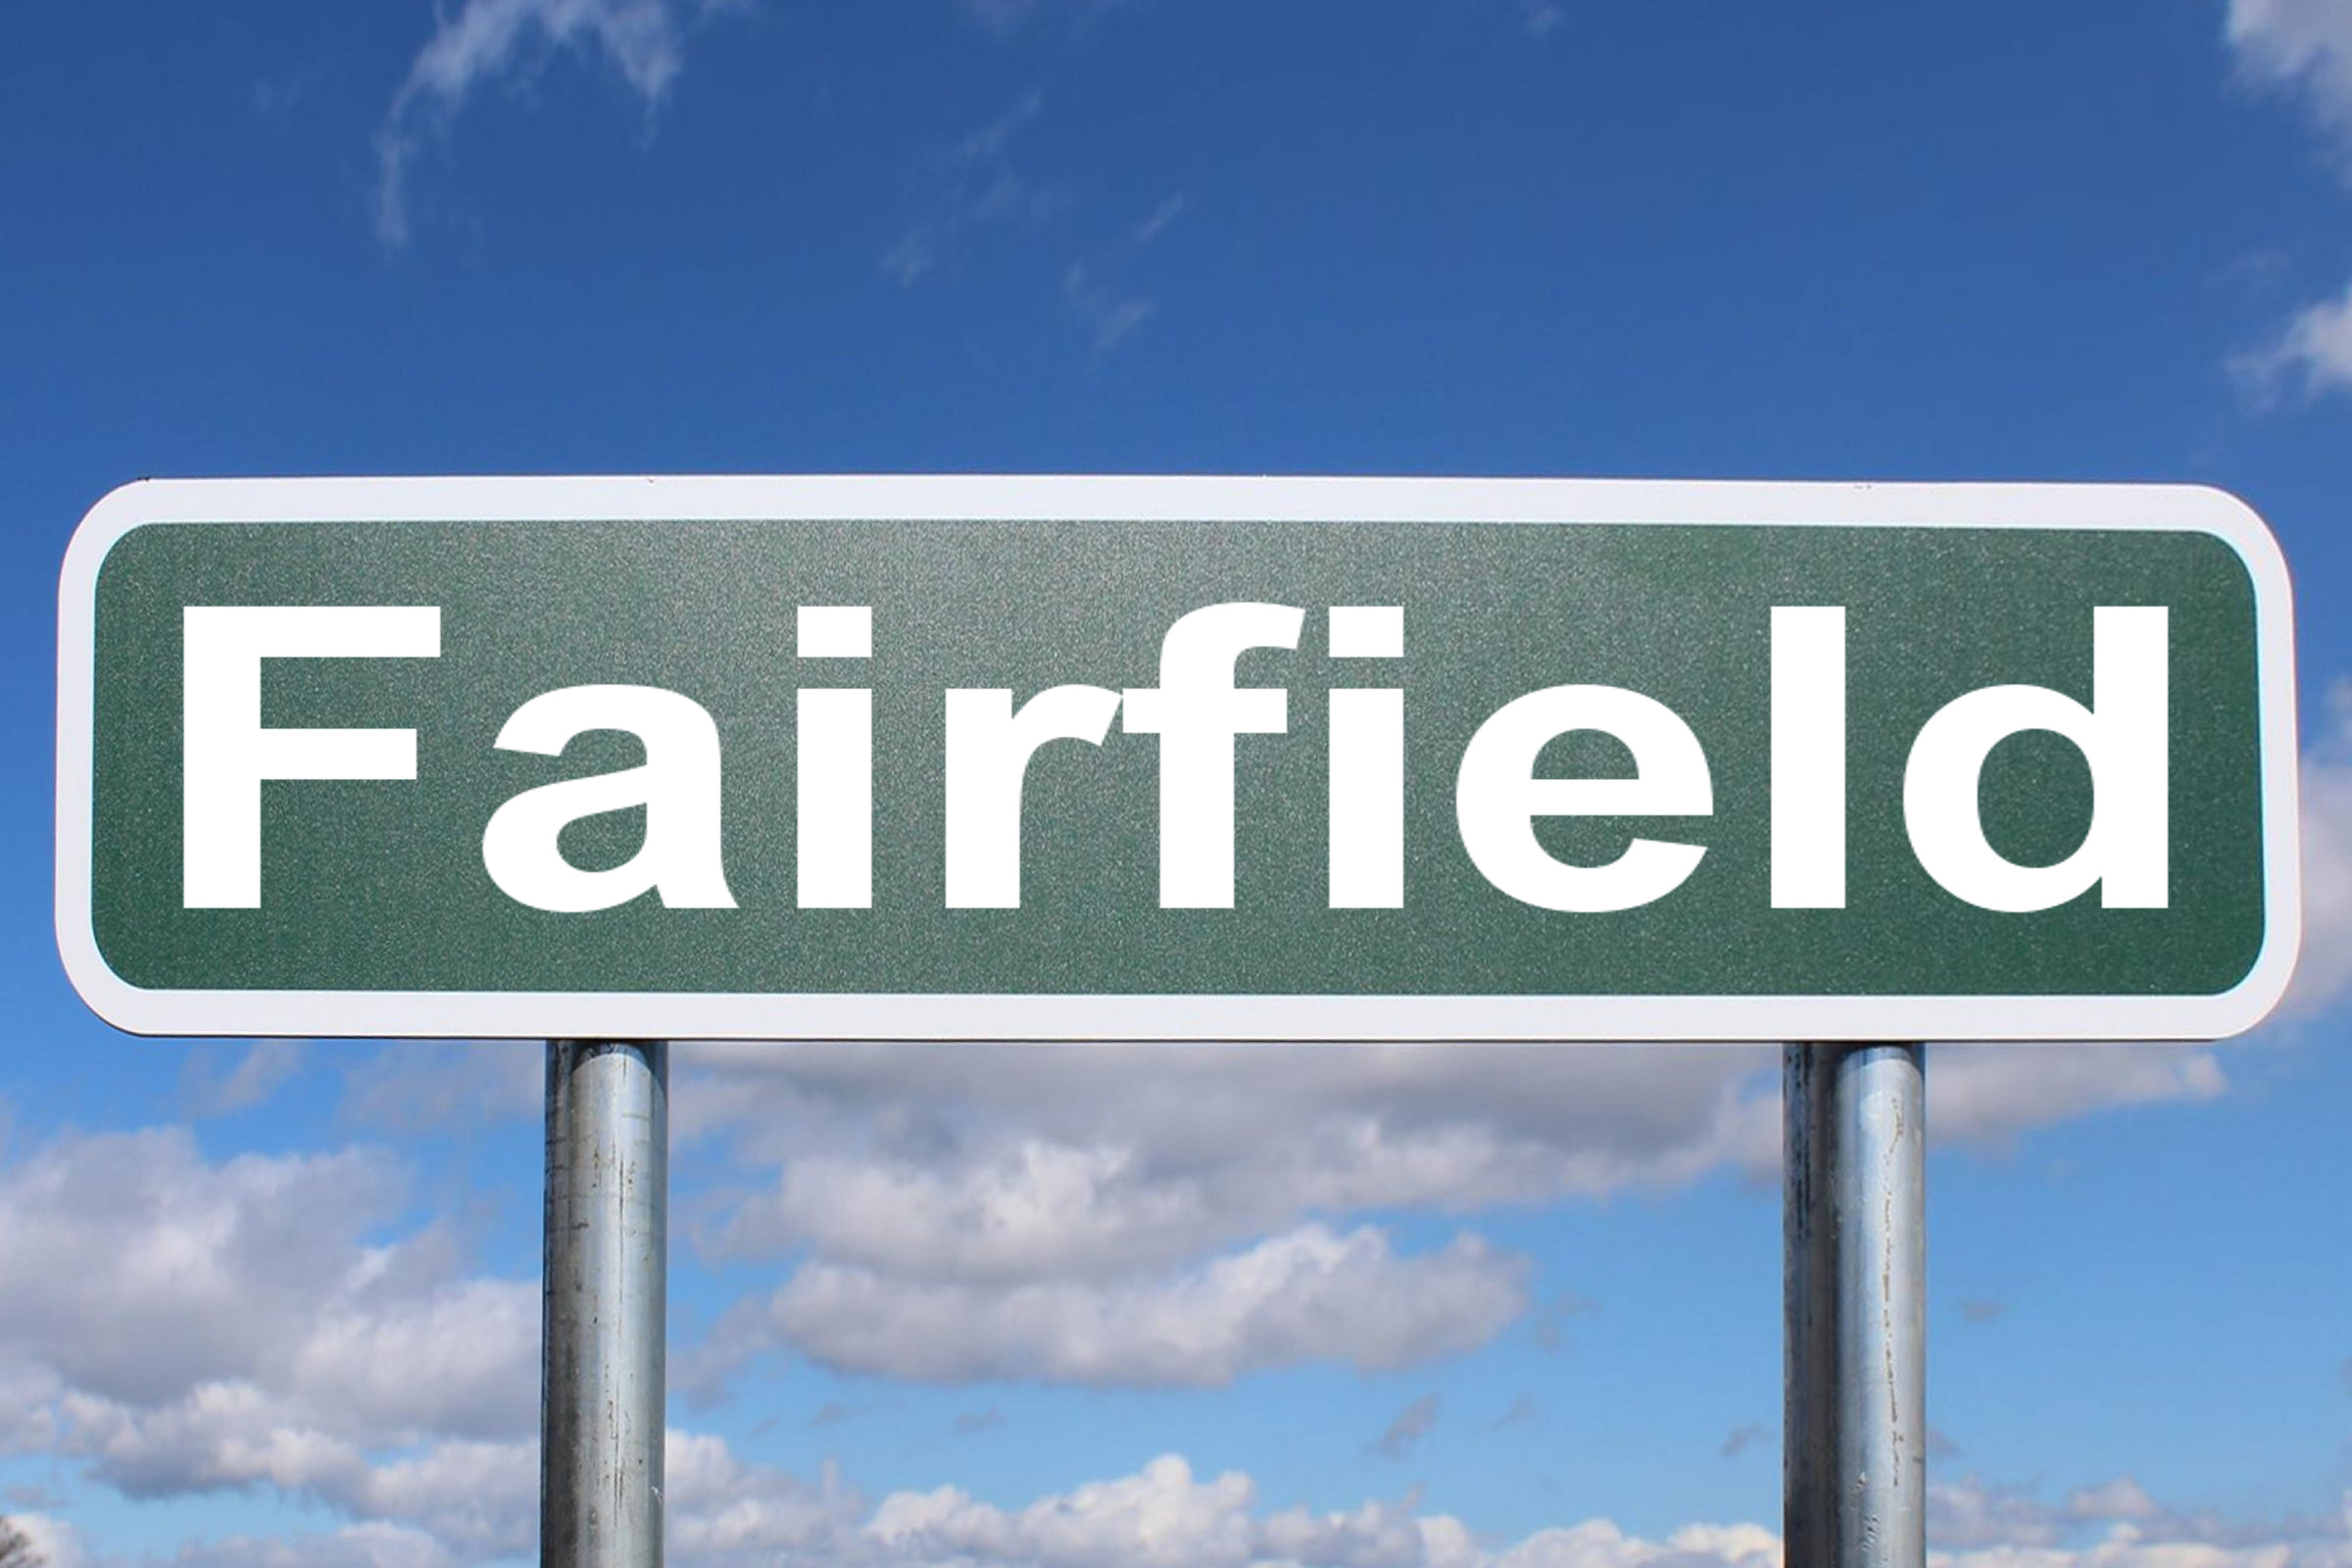 fairfield